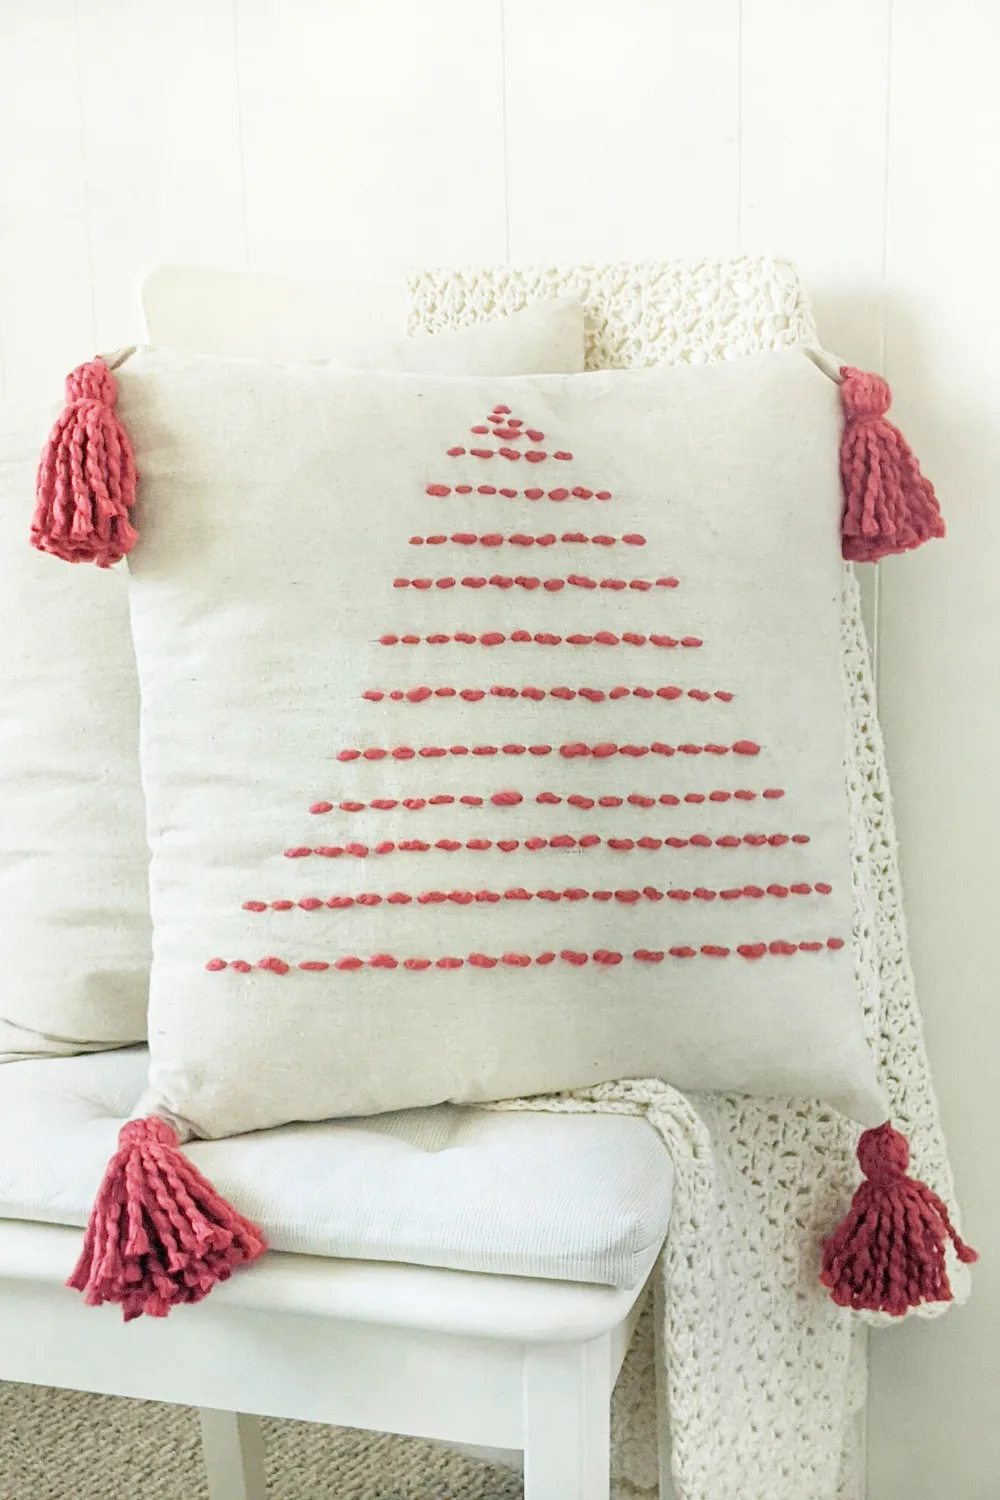 How to make a handmade Christmas tree pillow